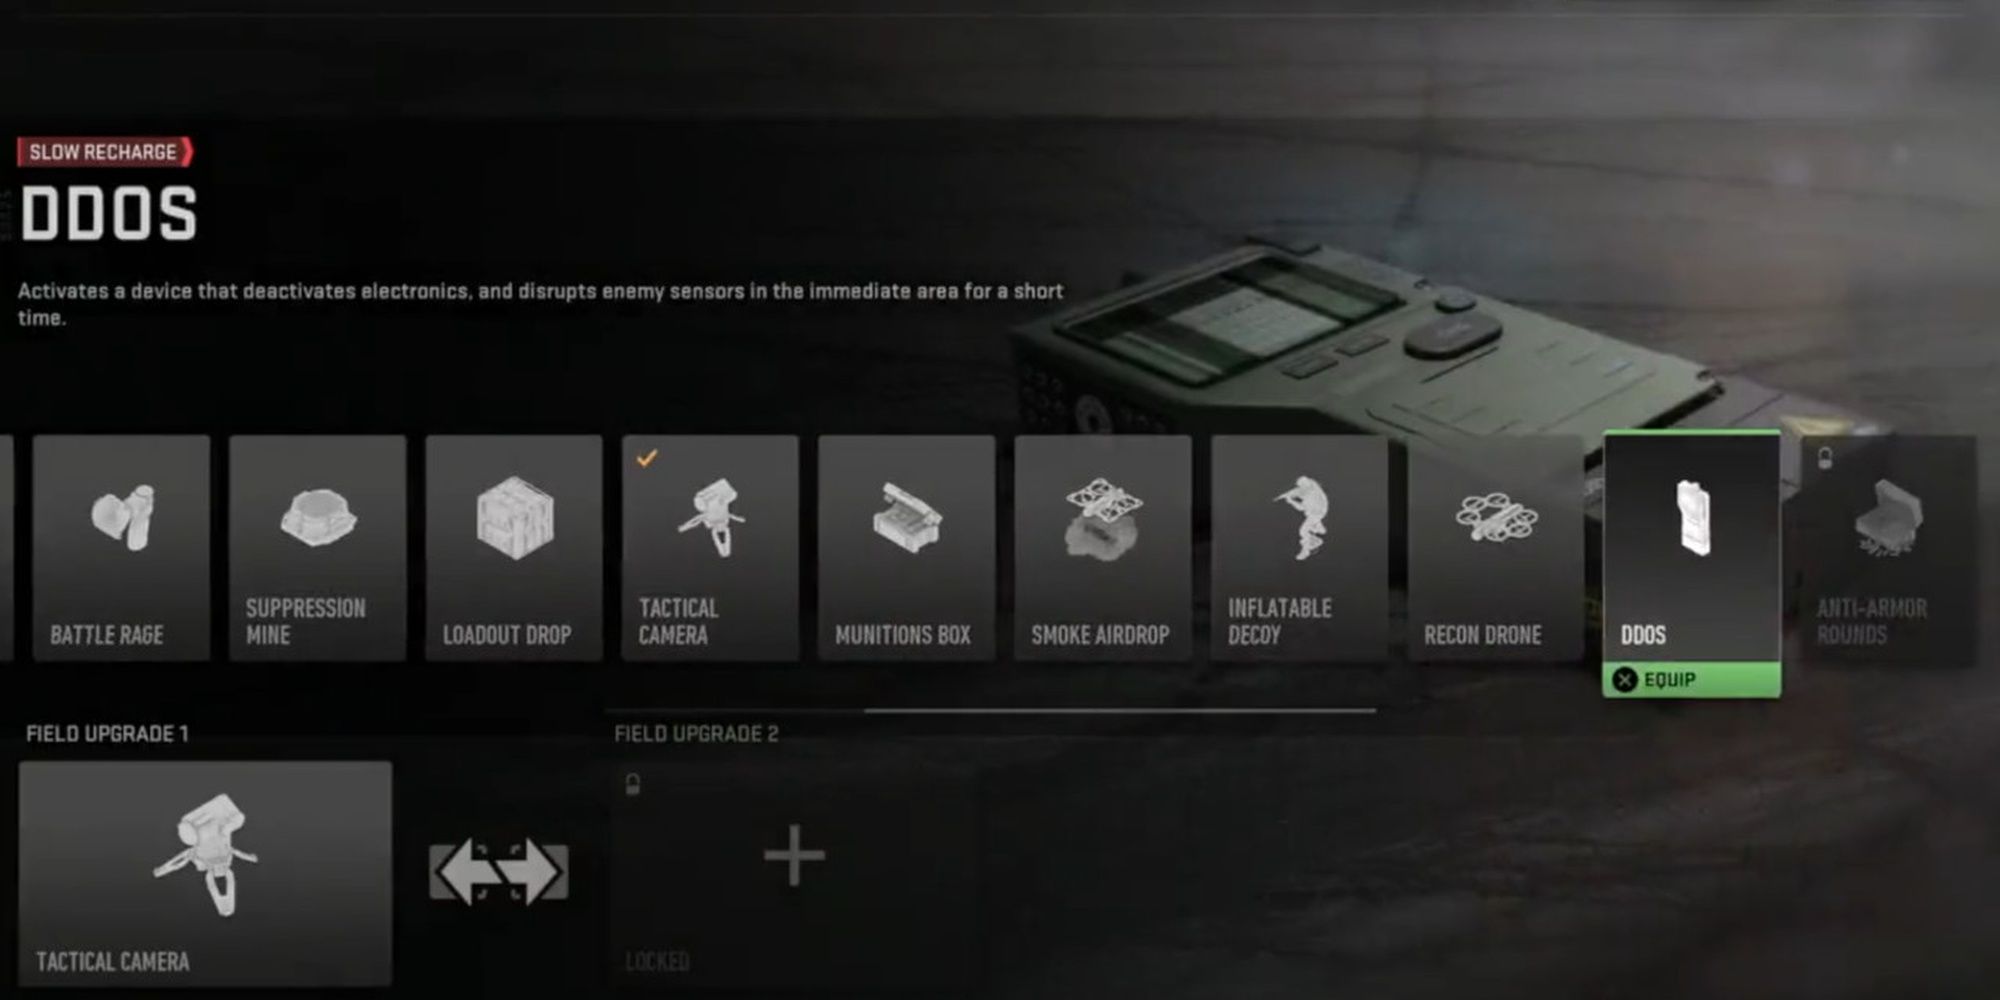 Field Upgrade Menu in Modern Warfare 2 highlighting DDOS